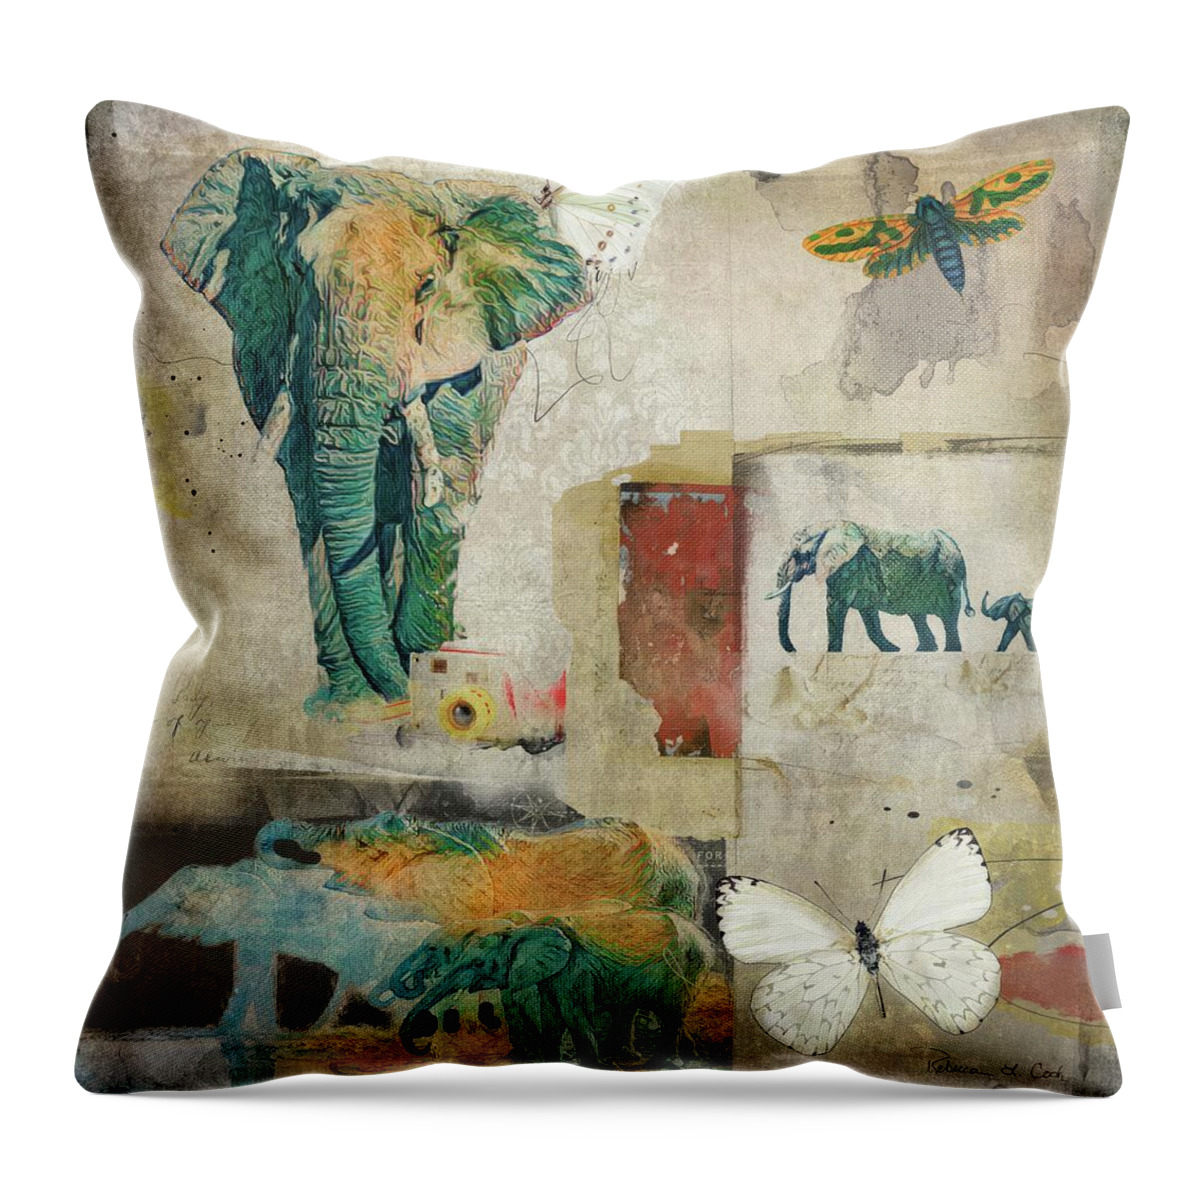 Elephants And Butterflies Throw Pillow featuring the digital art Elephants And Butterflies by Bellesouth Studio